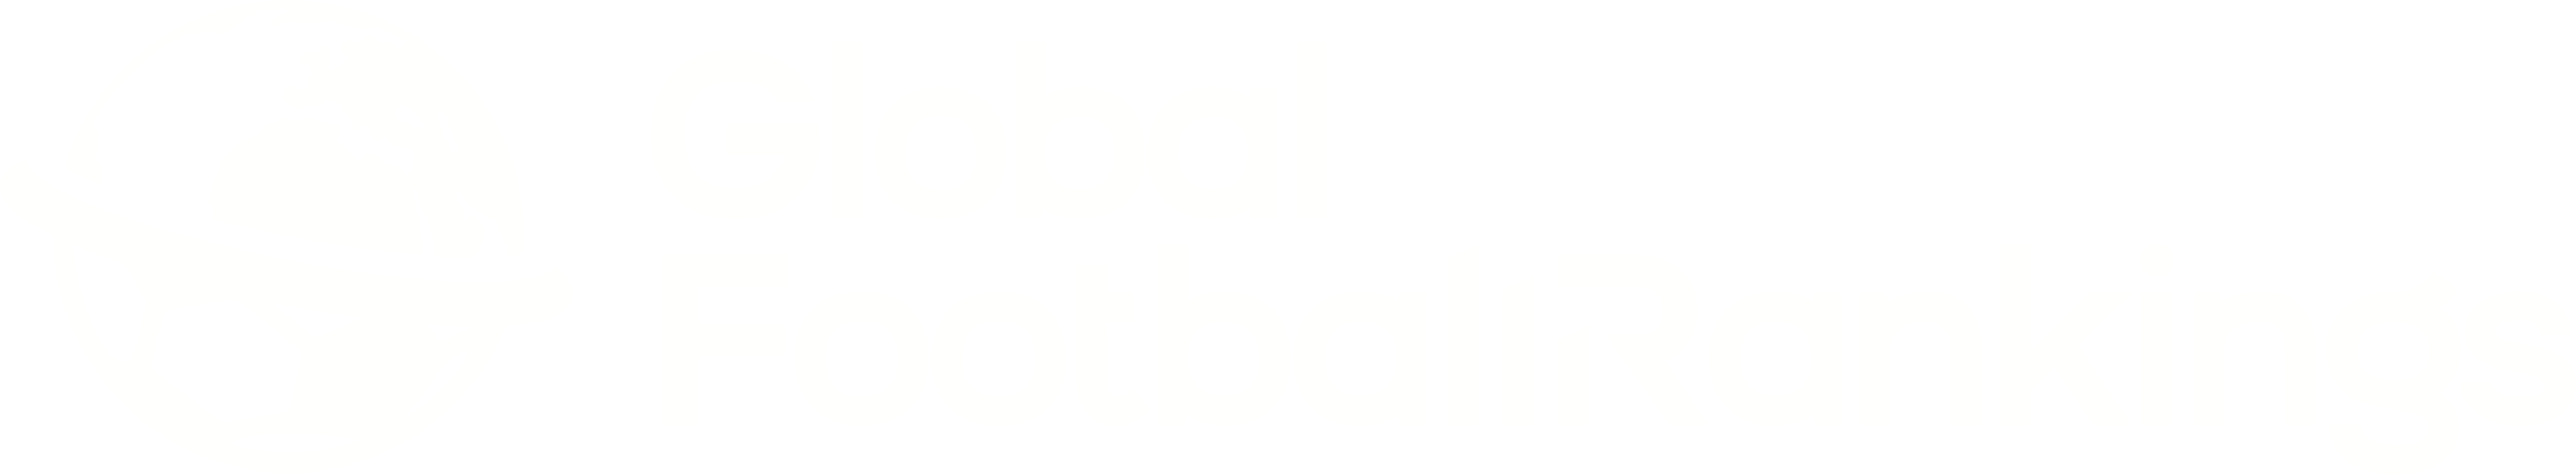 Global Football Rankings